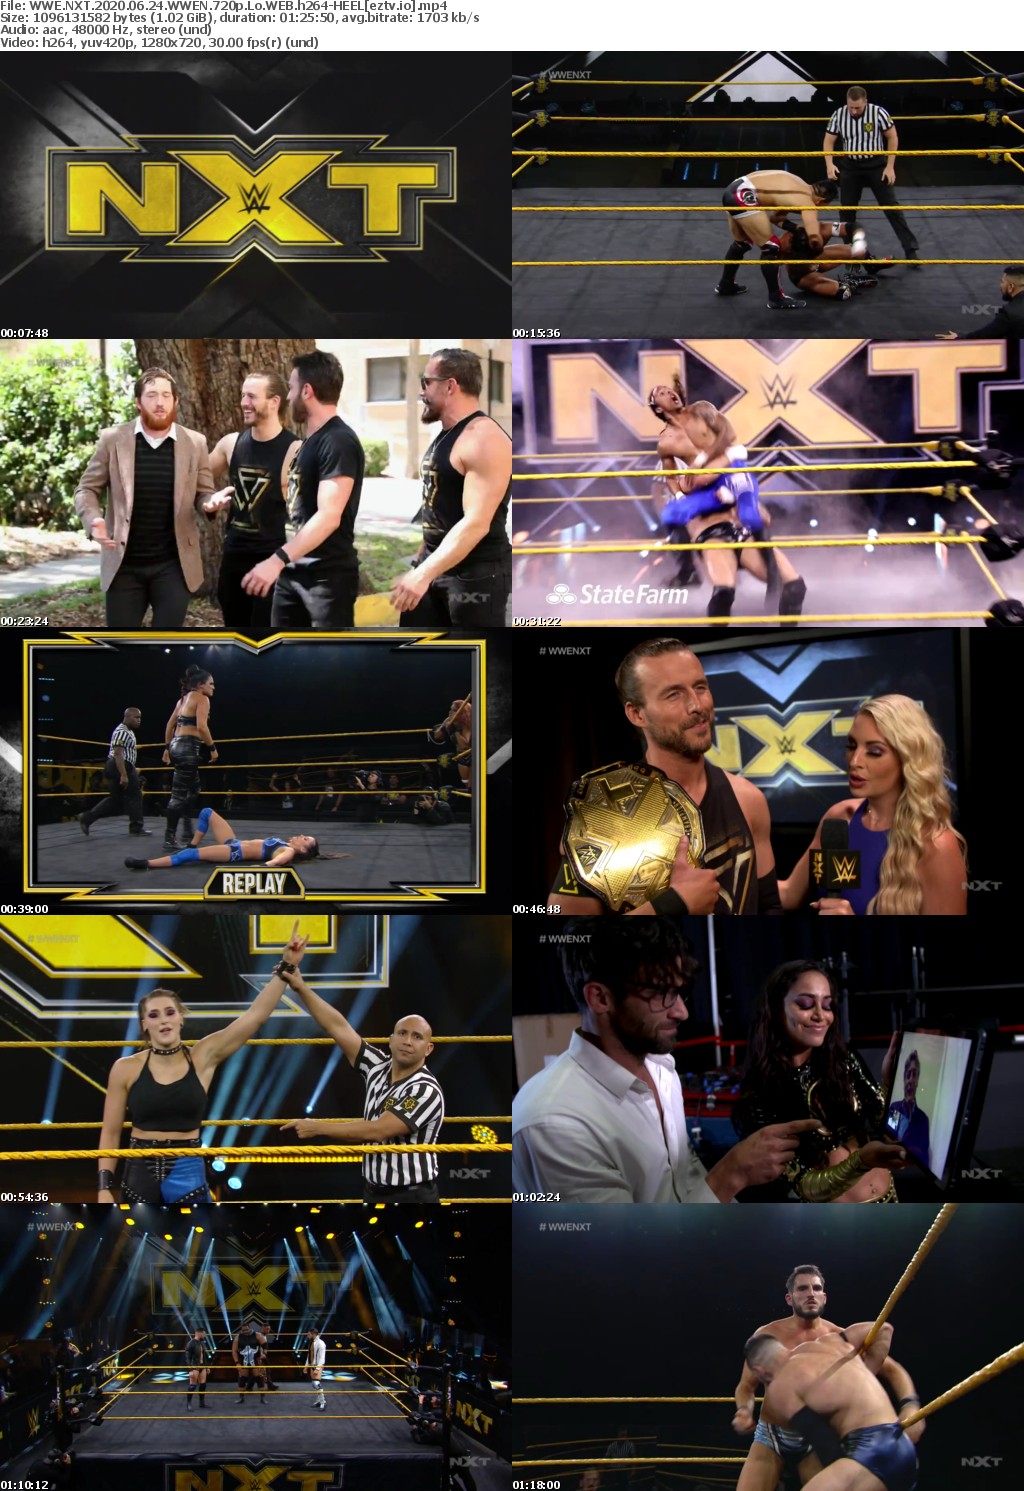 WWE NXT 2020 06 24 WWEN 720p Lo WEB h264-HEEL